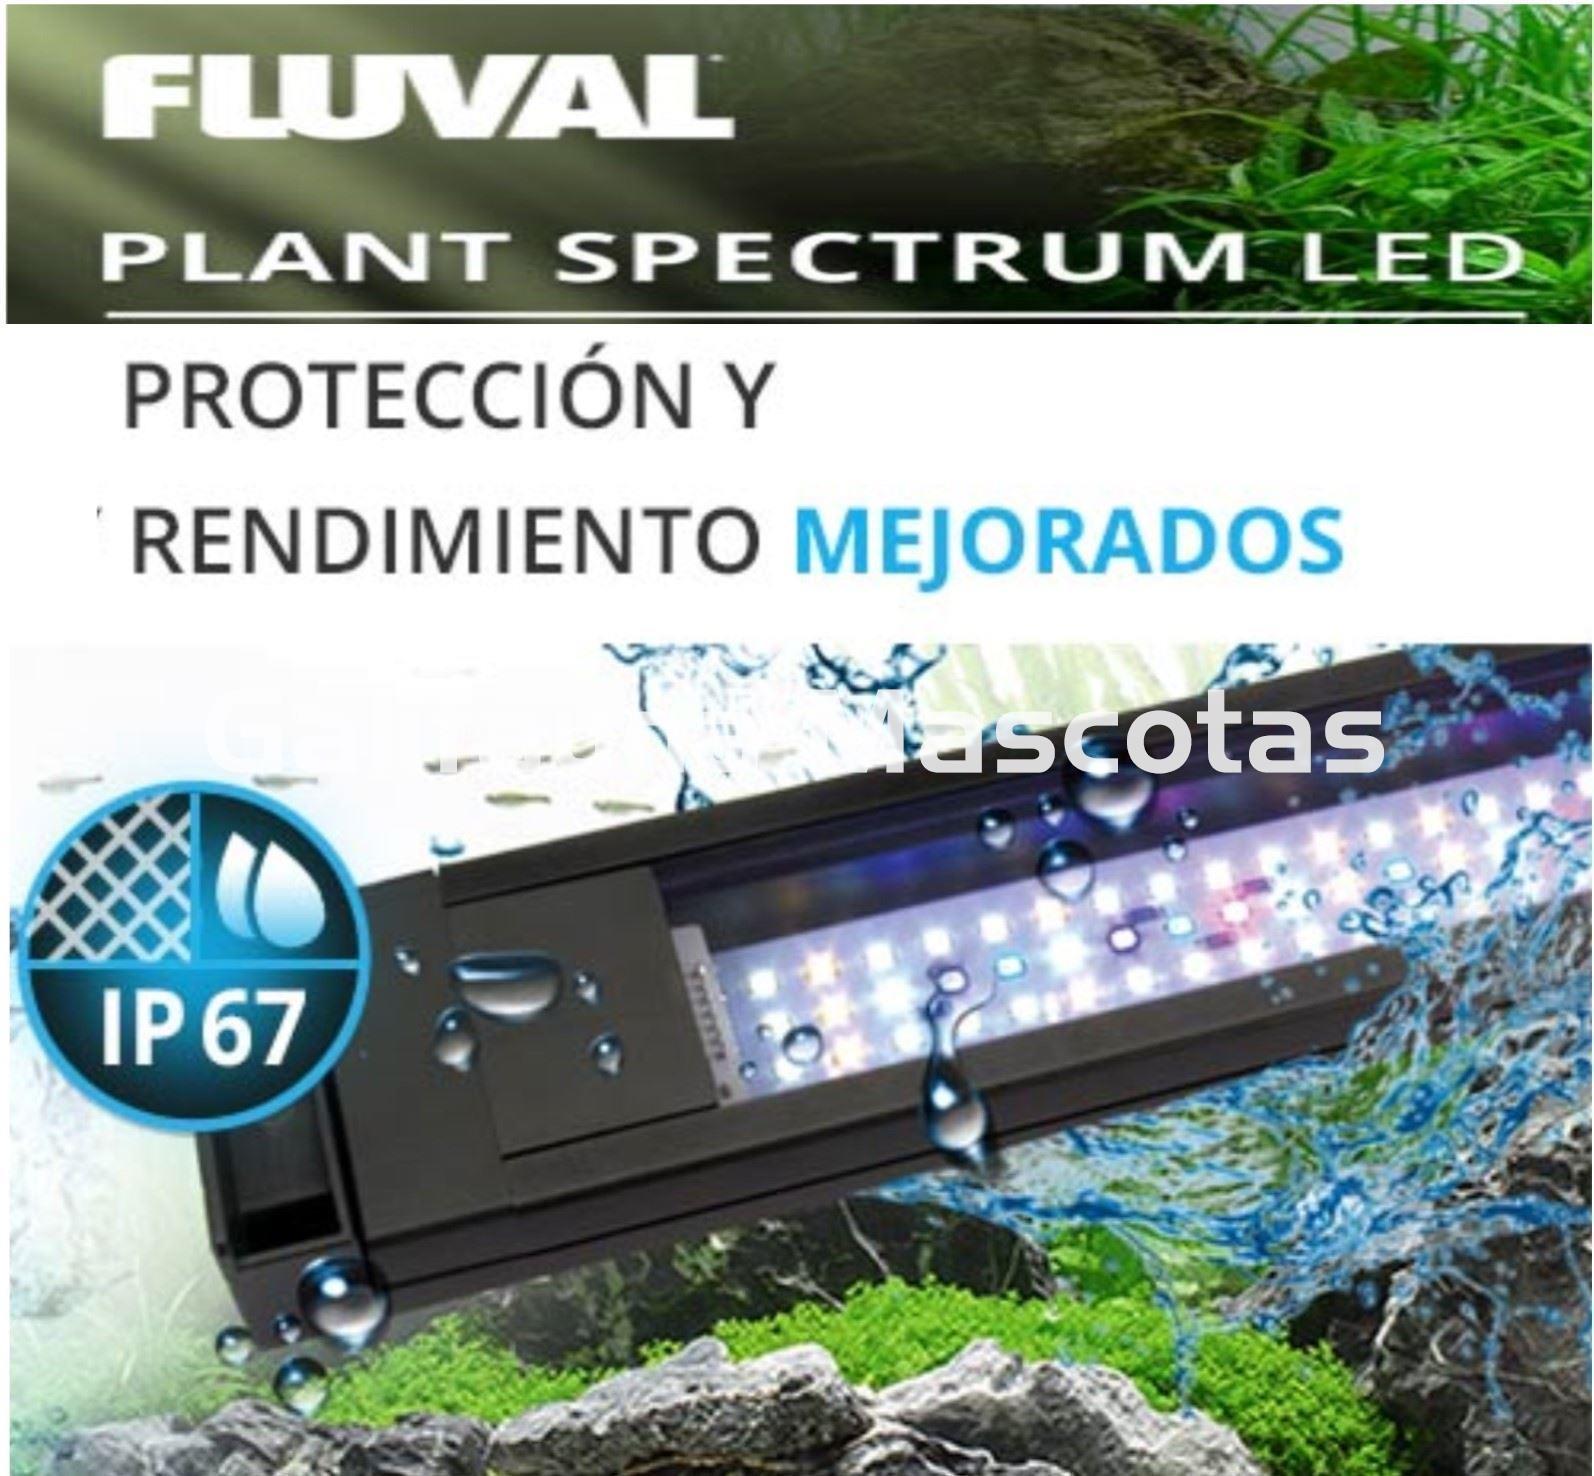 PANTALLA LED BLUETOOTH FLUVAL PLANT SPECTRUM 3. Especial plantación. APP Fluval. Brazos extensibles. - Imagen 4